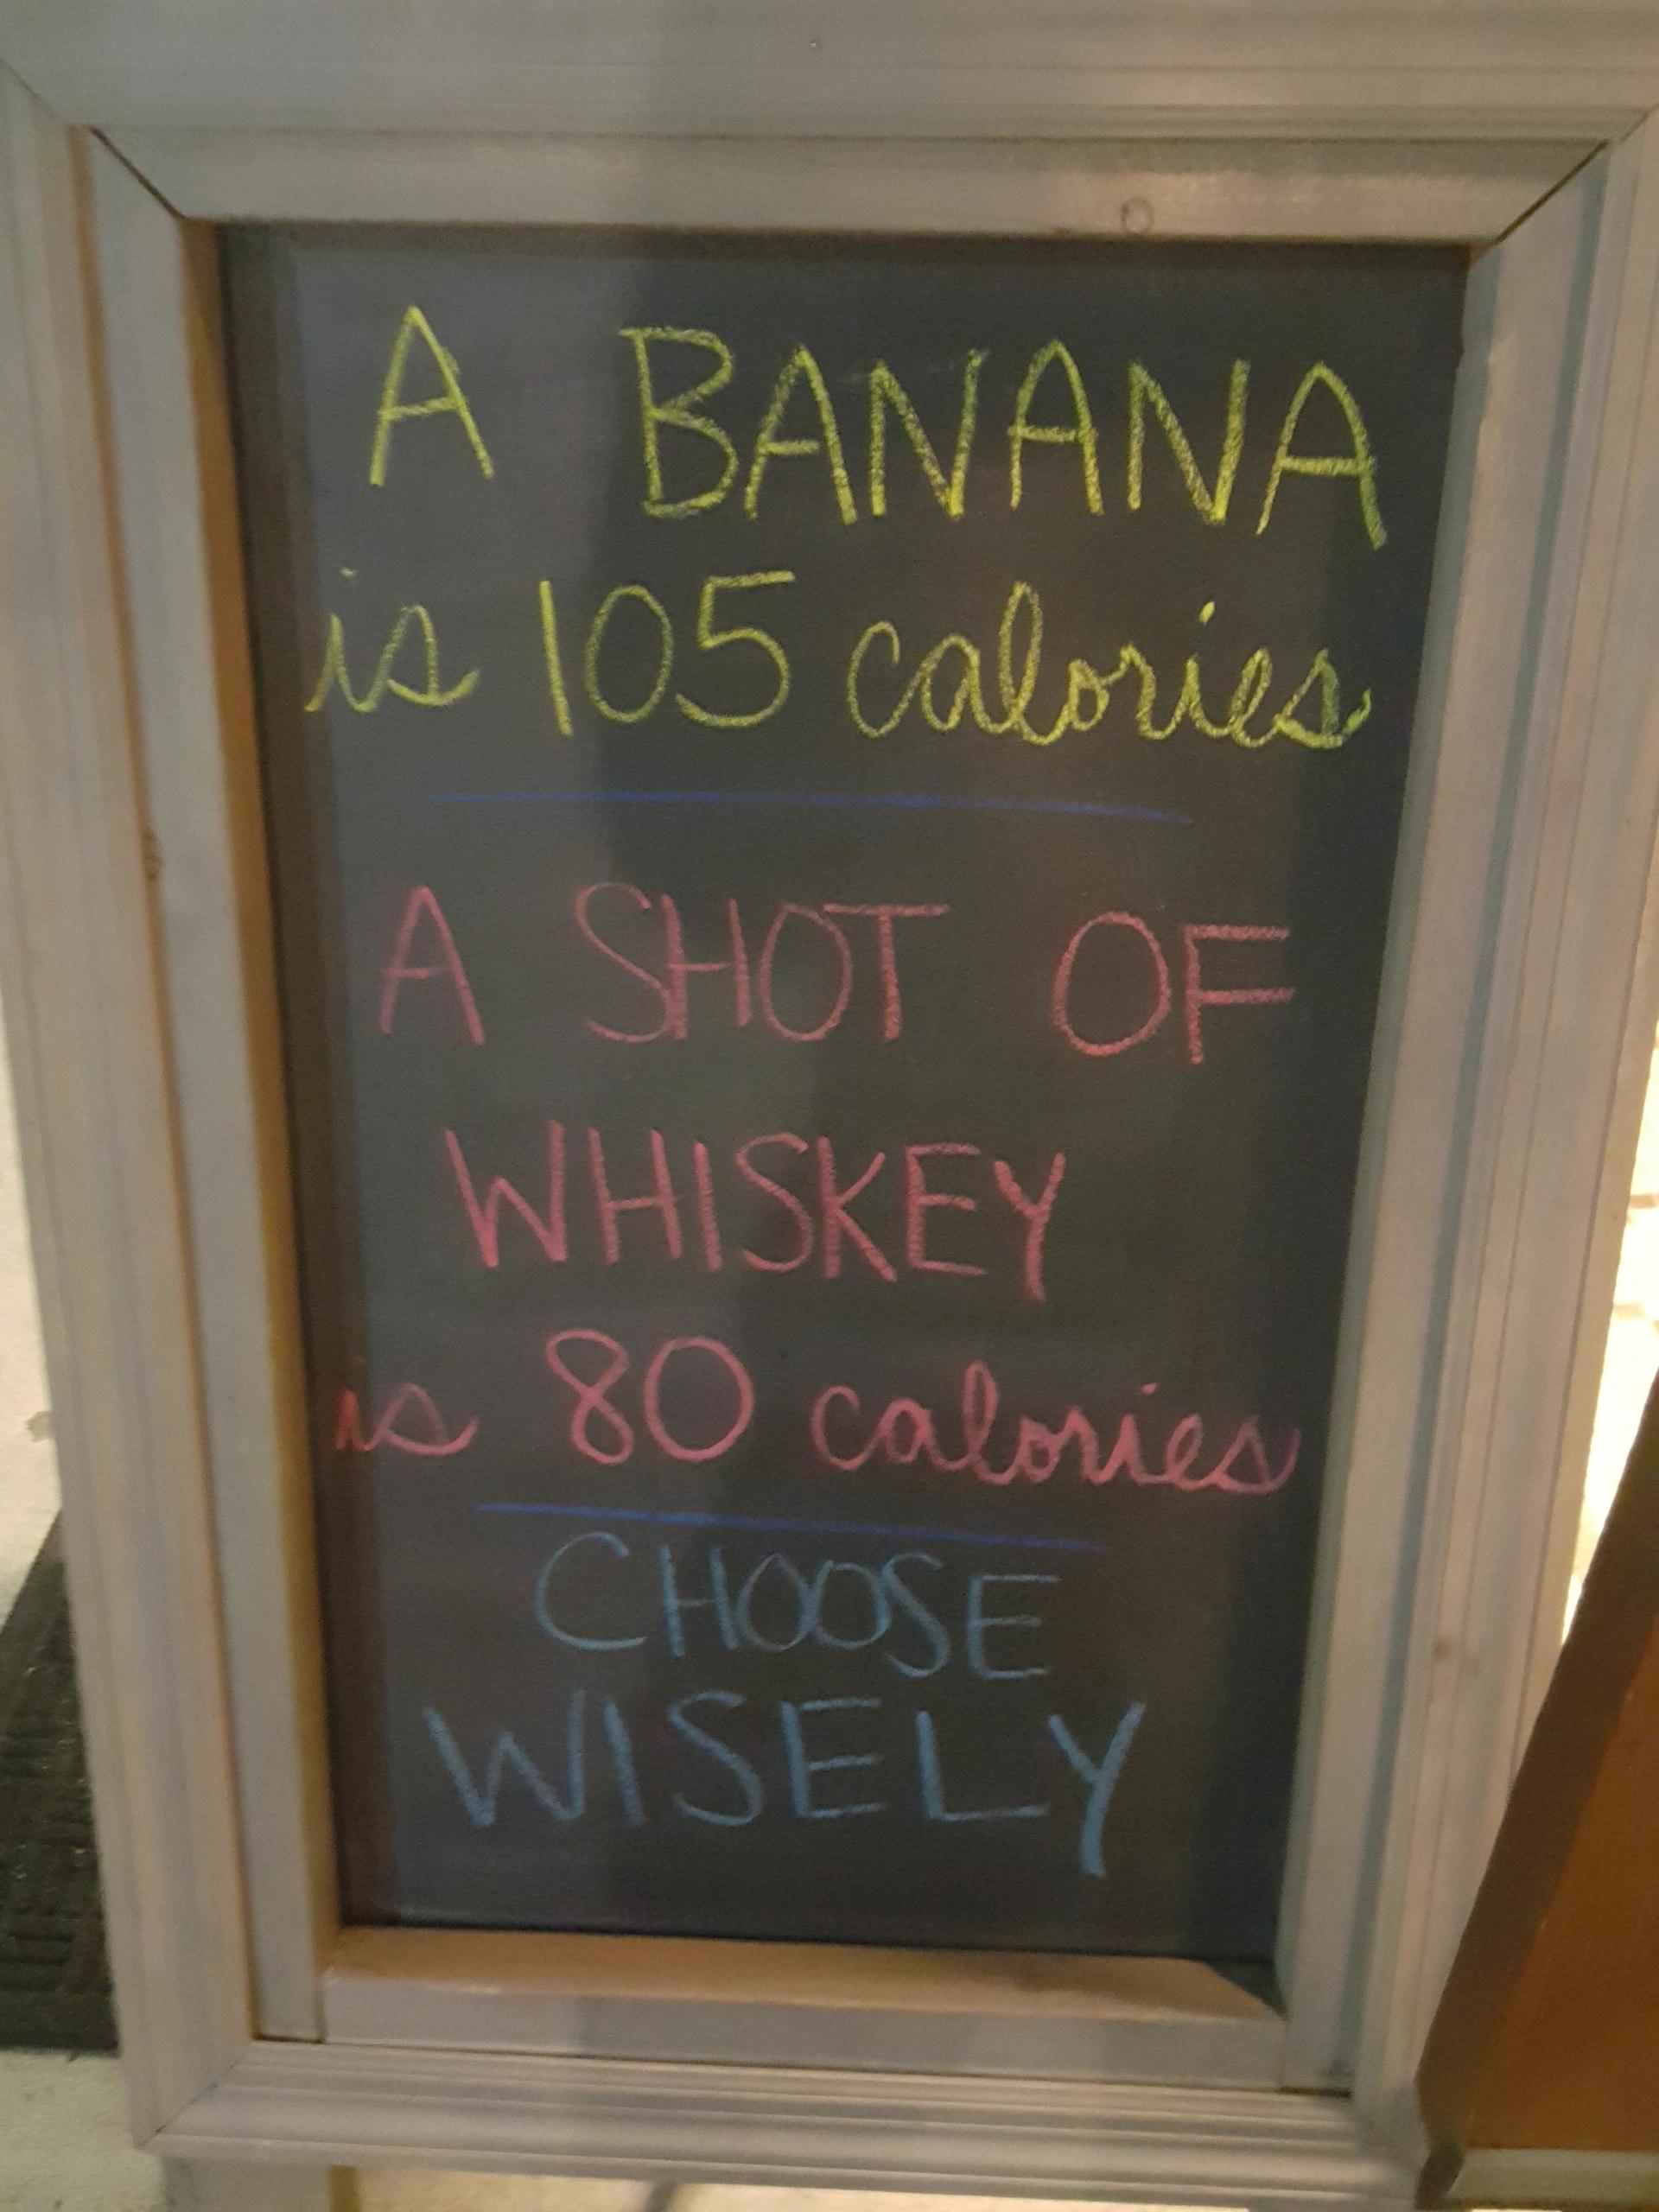 Banana vs Whiskey…Choose wisely